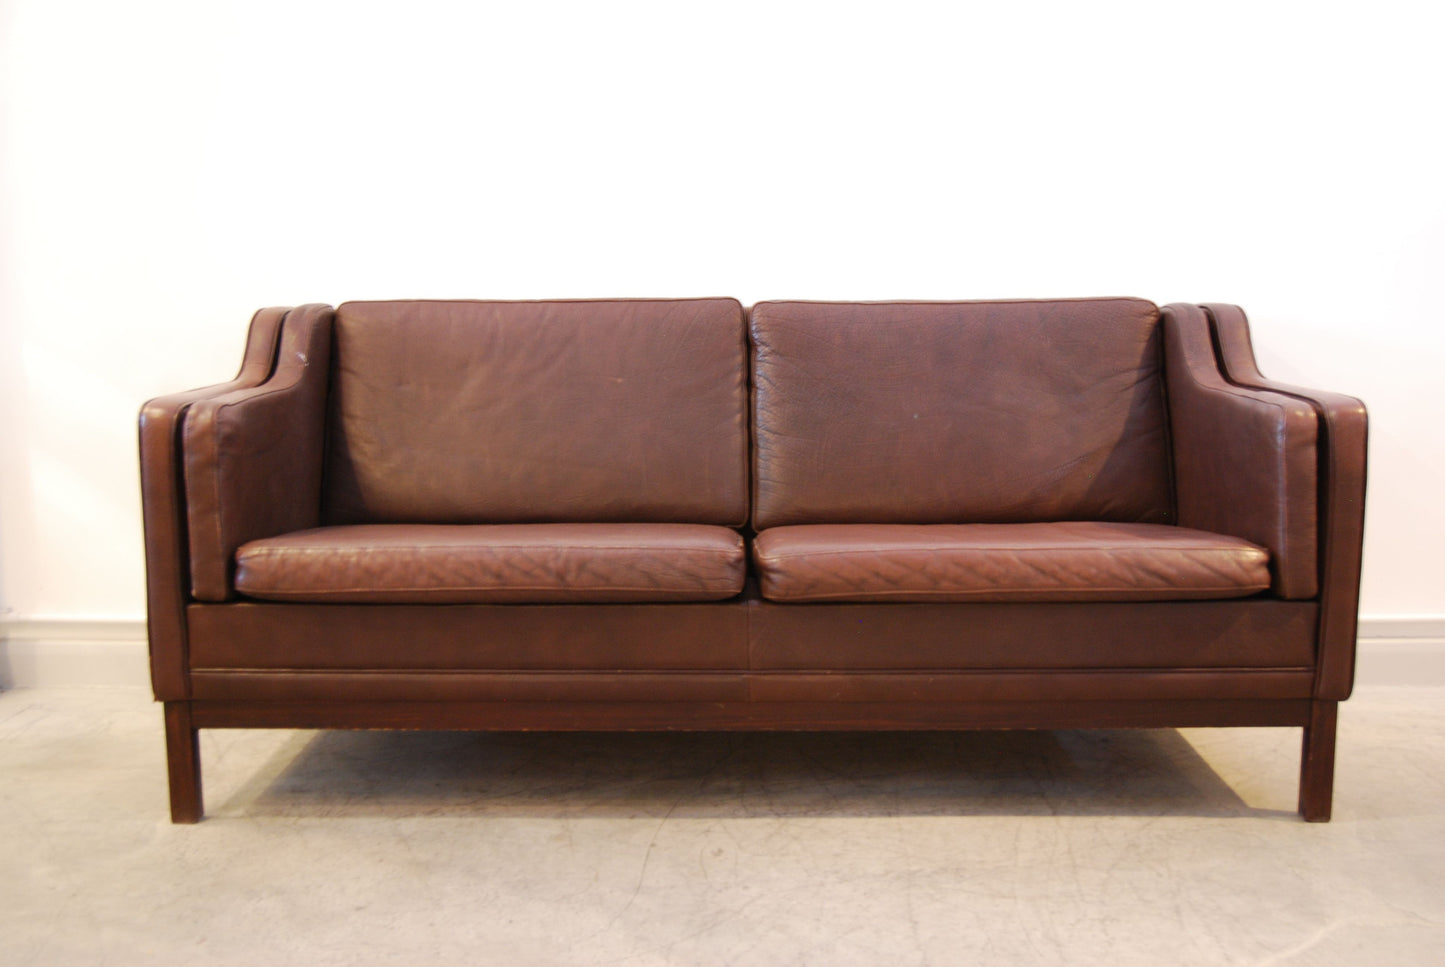 Three seat sofa in chocolate brown leather